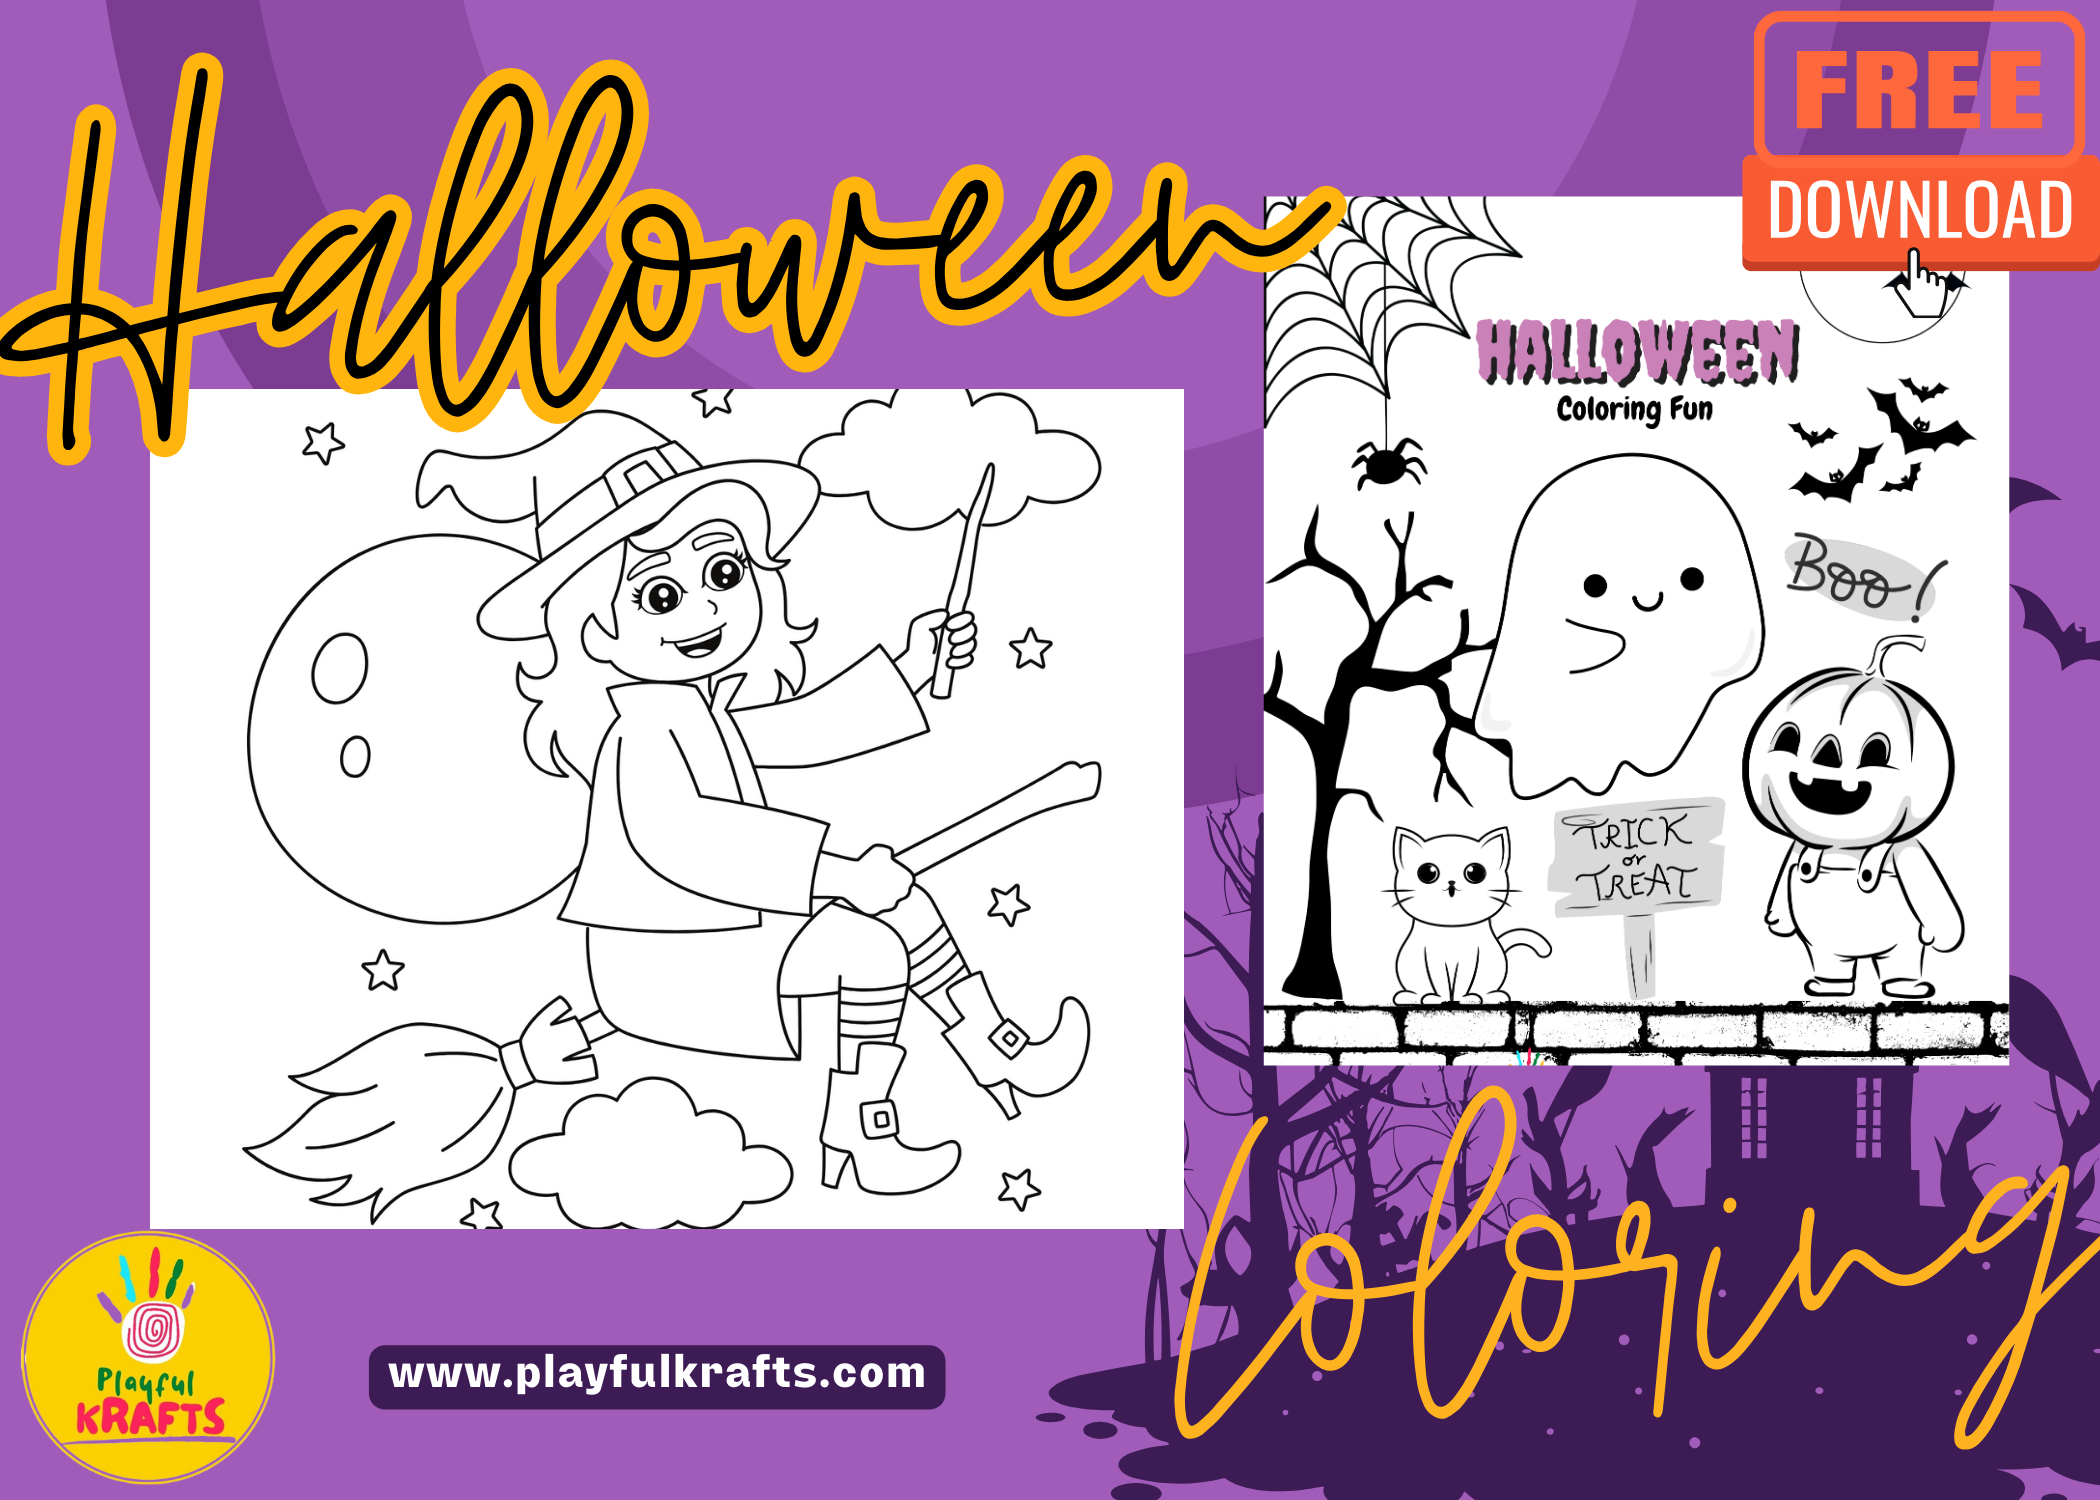 Halloween-free-coloring